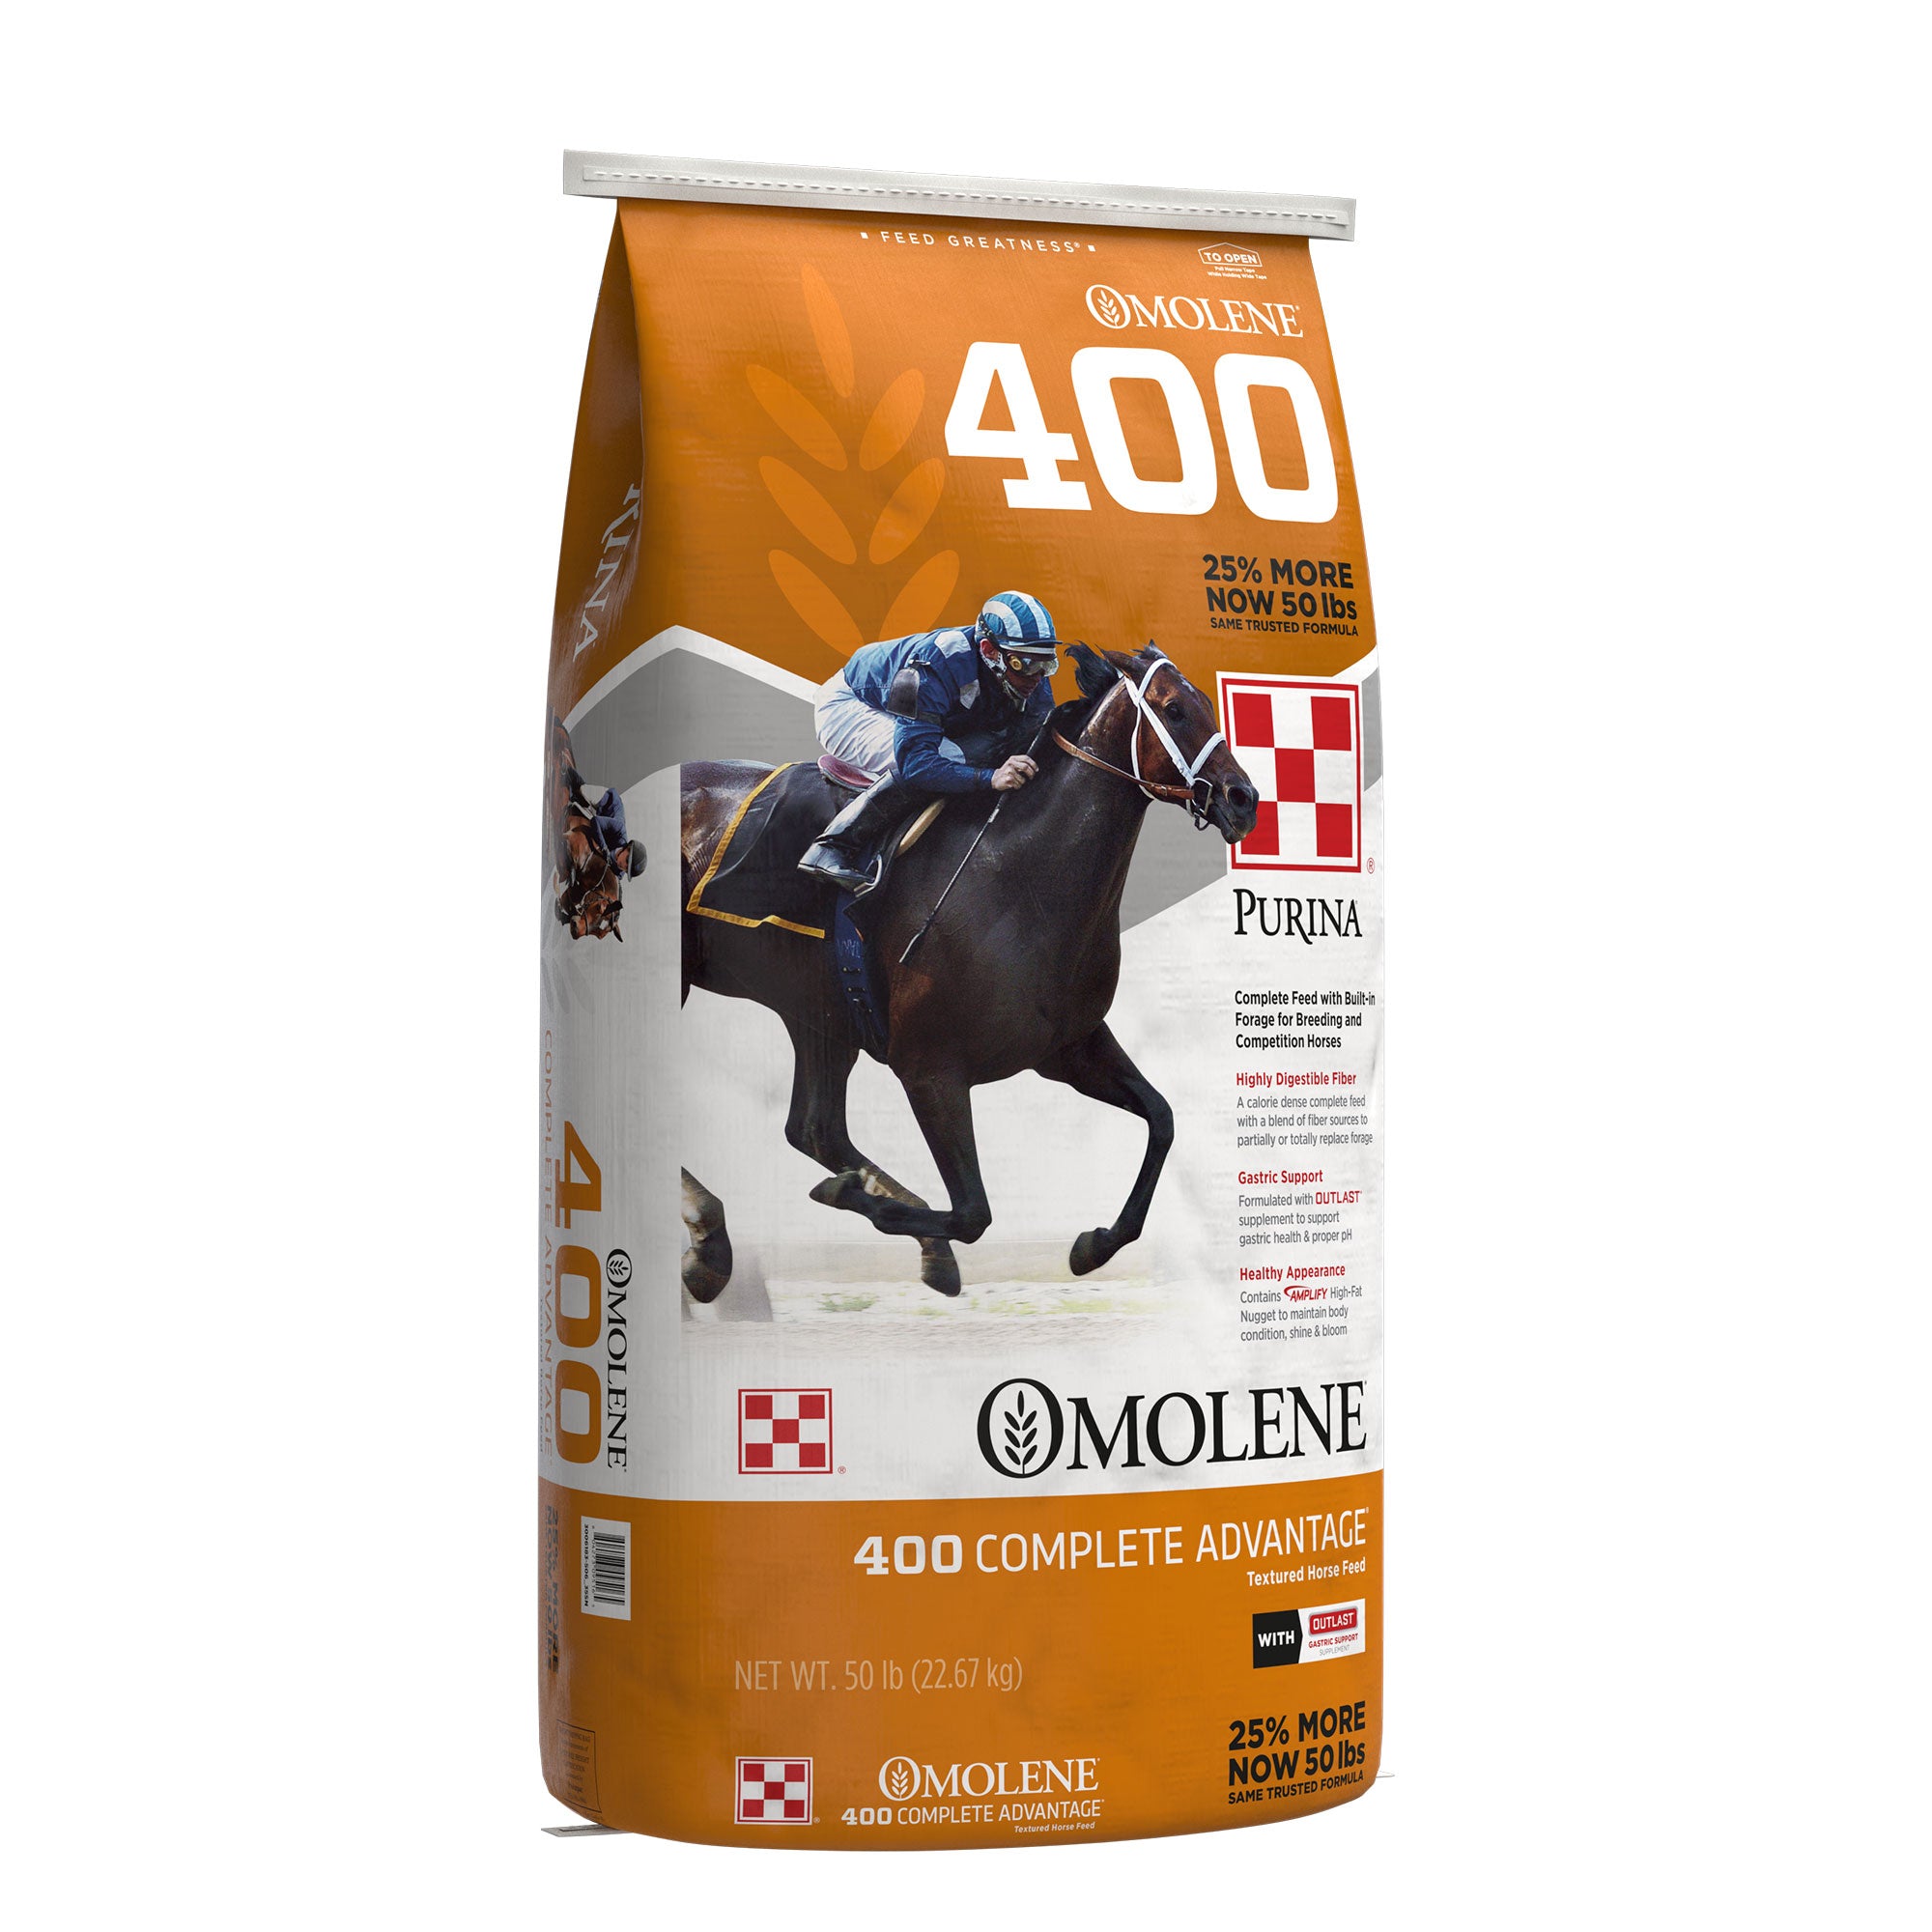 purina-omolene-400-complete-advantage-horse-feed-purina-animal